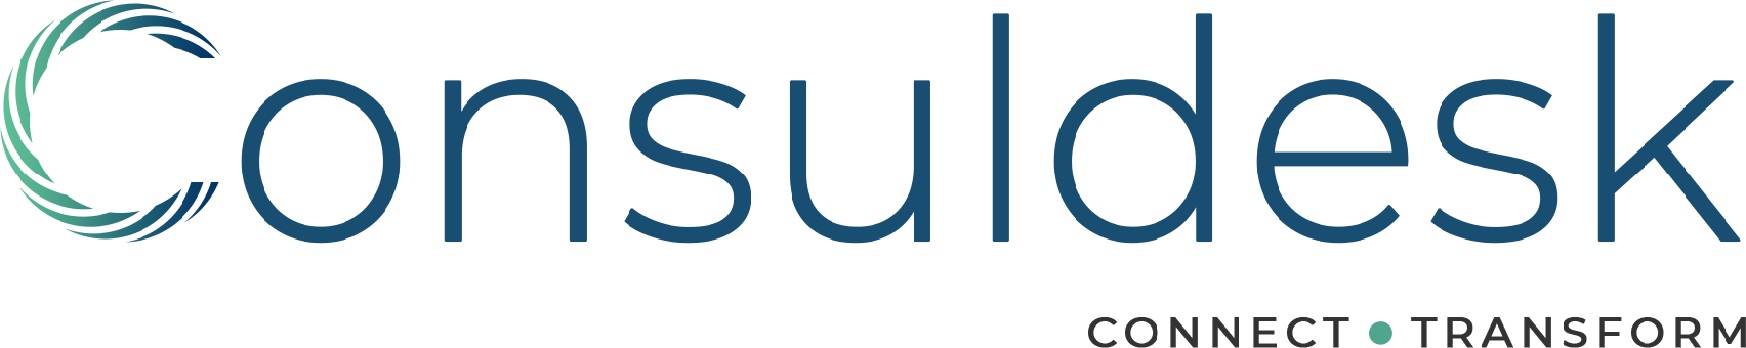 Consuldesk Solutions logo